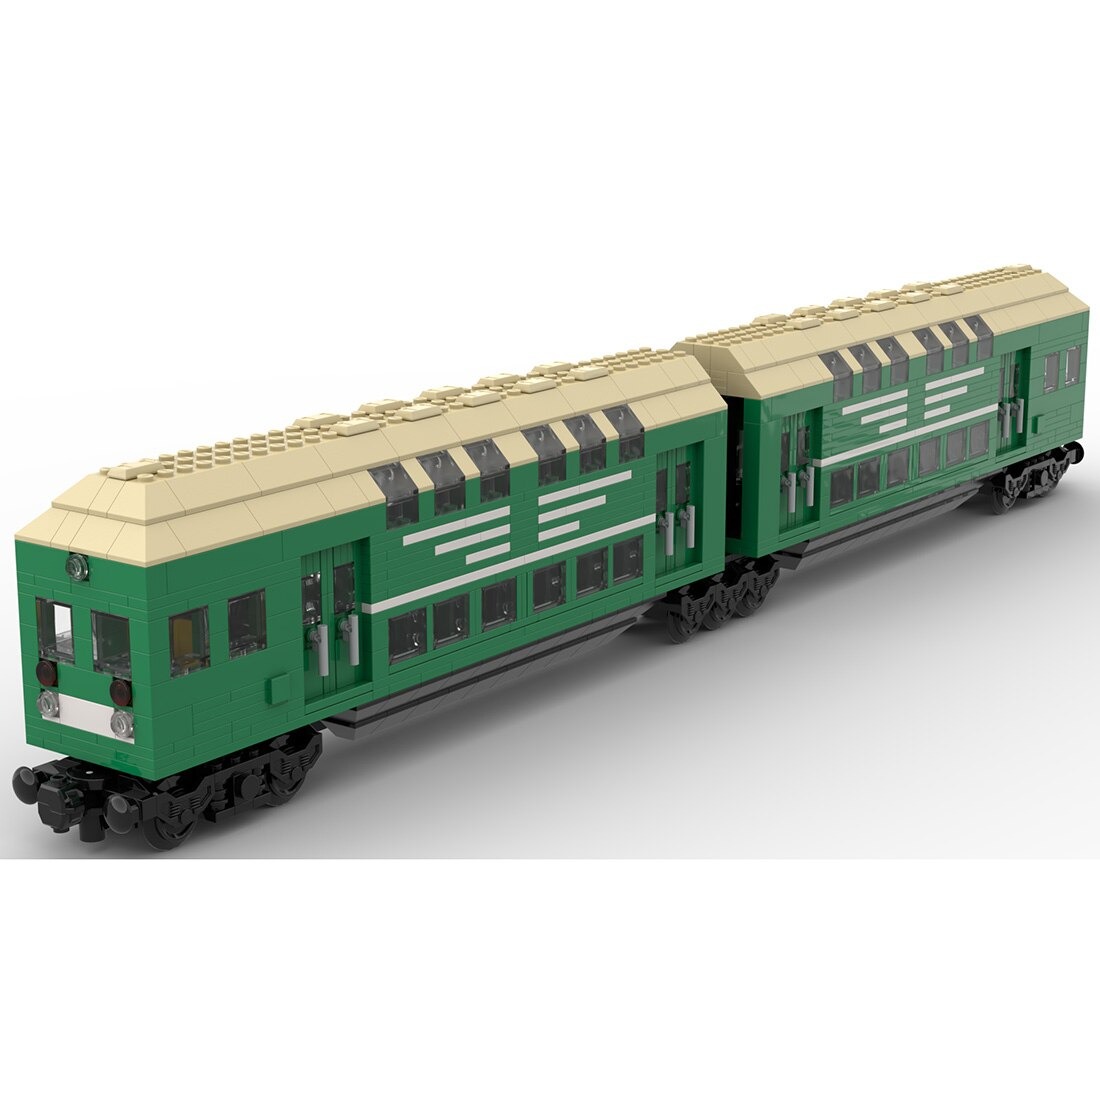 authorized moc 109281 7 axle train carri main 5 2 - CADA Block